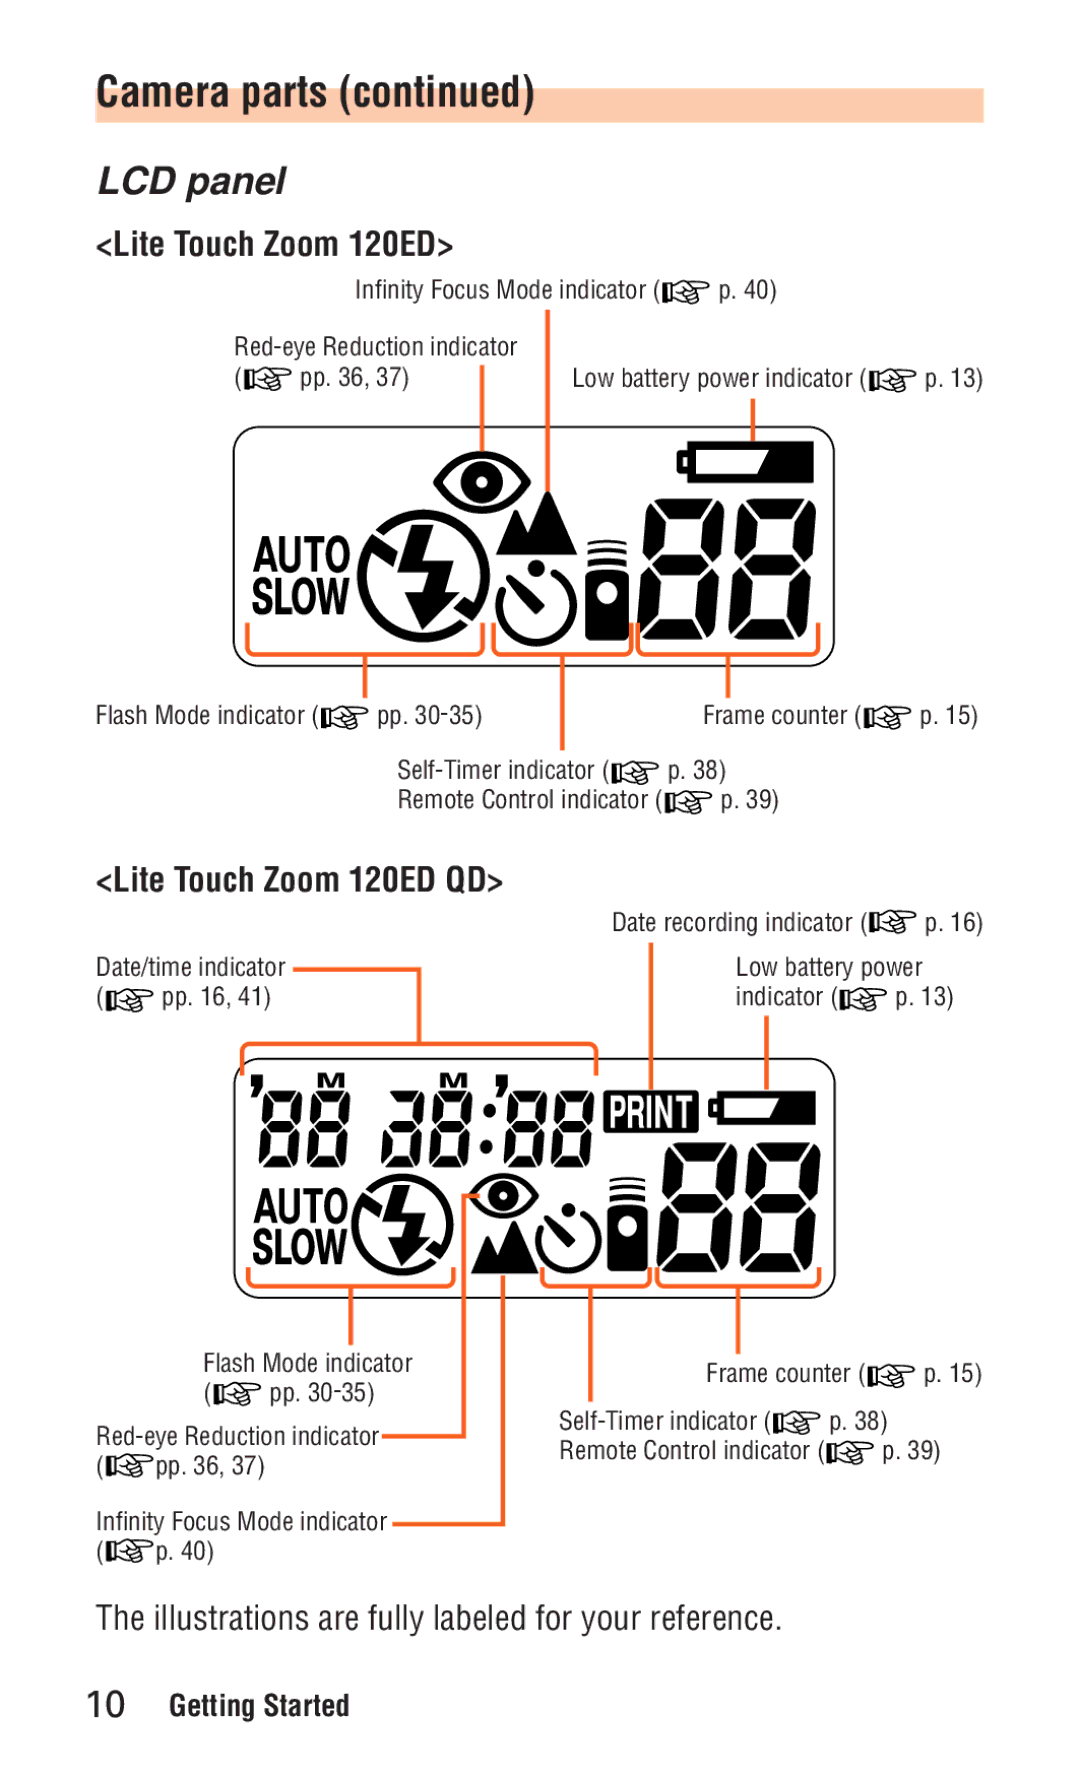 Nikon ED 120 instruction manual Camera parts, LCD panel, Lite Touch Zoom 120ED QD 